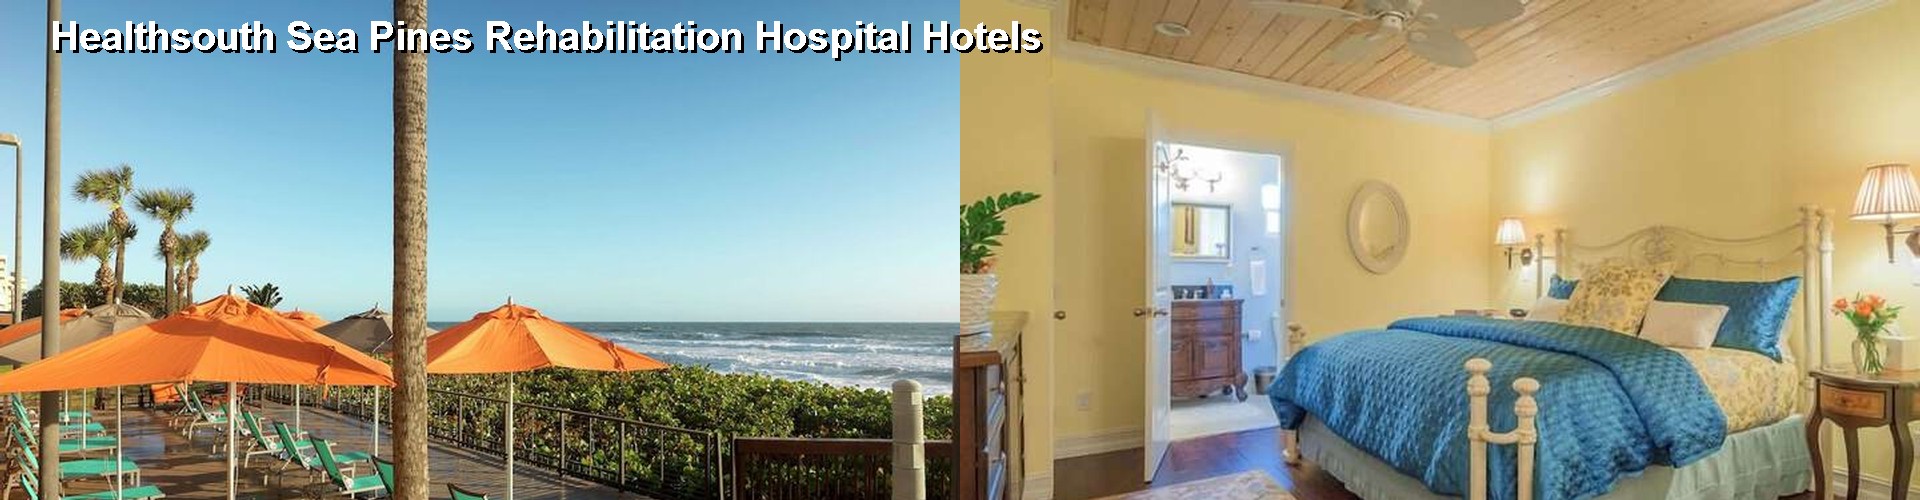 5 Best Hotels near Healthsouth Sea Pines Rehabilitation Hospital